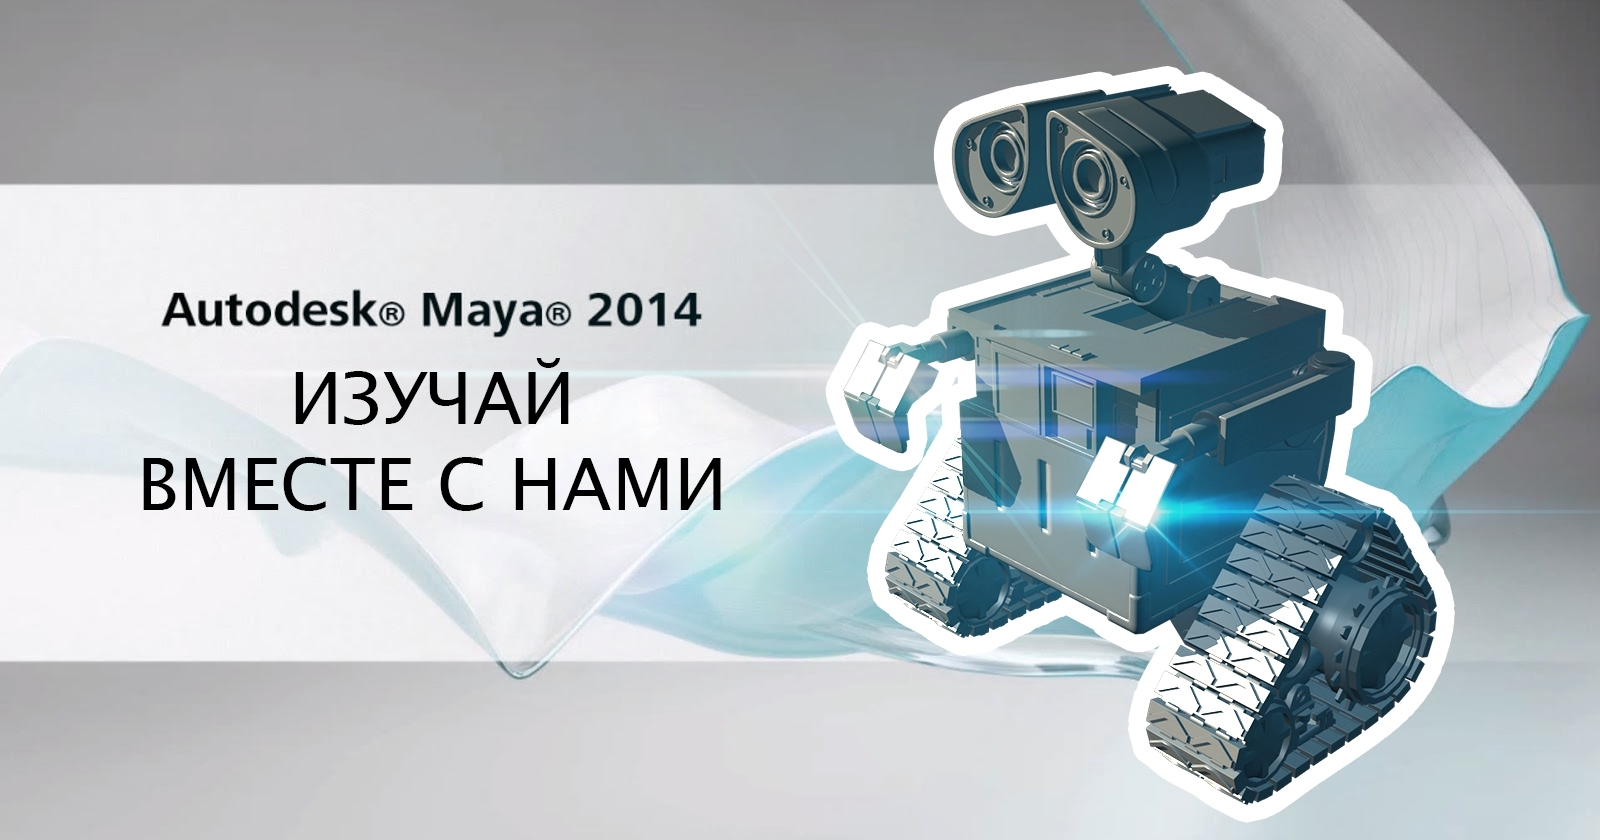 Autodesk MAYA 2014. Выпуск 5